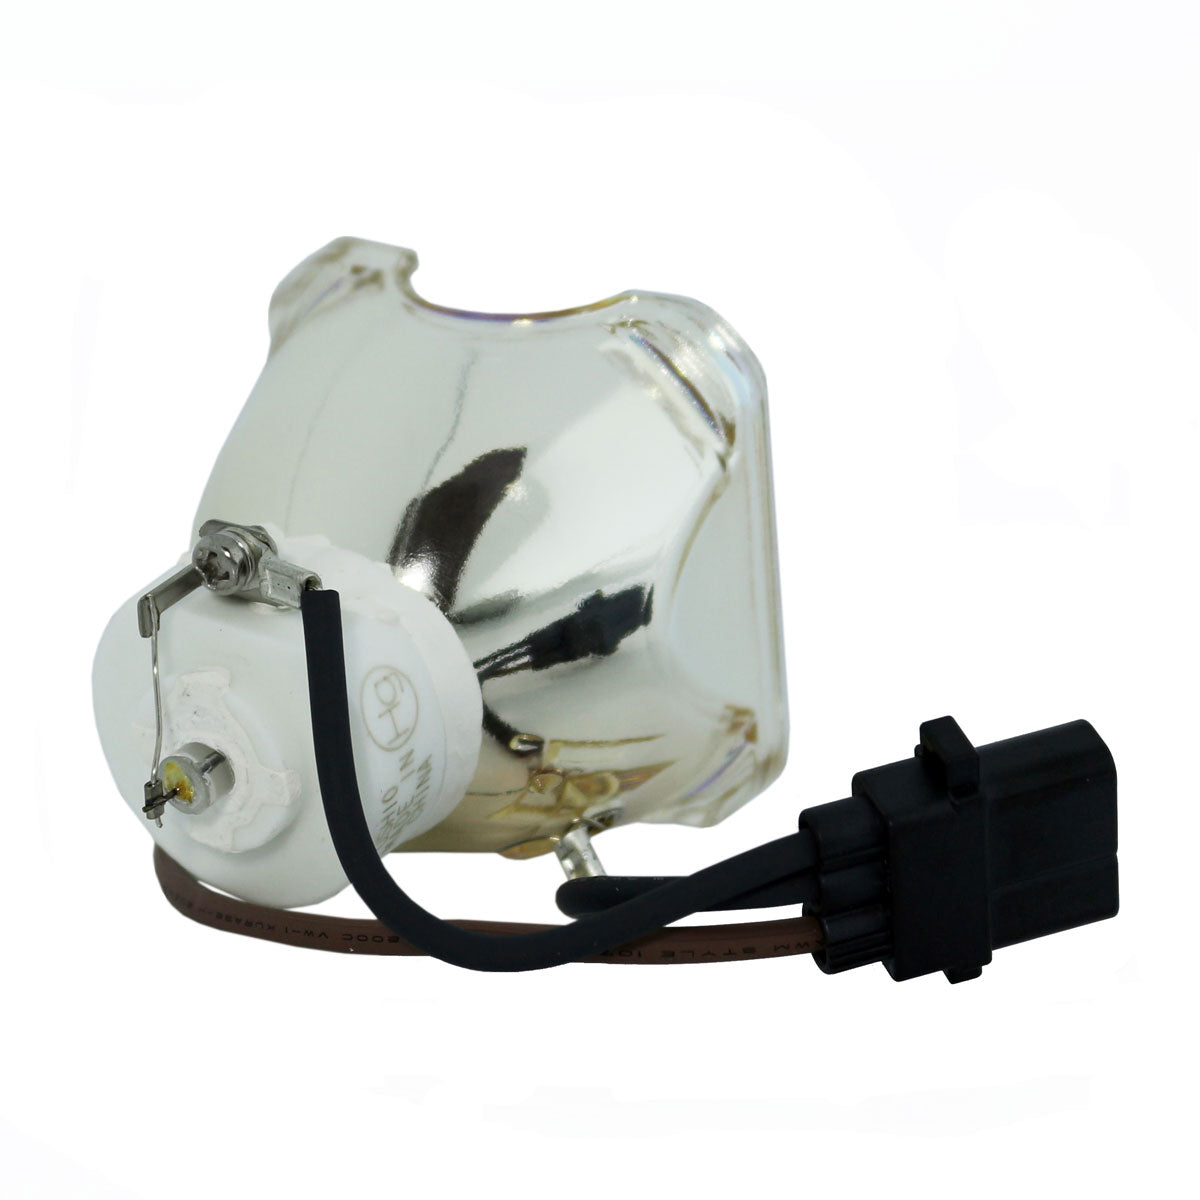 Viewsonic RLC-019 Ushio Projector Bare Lamp